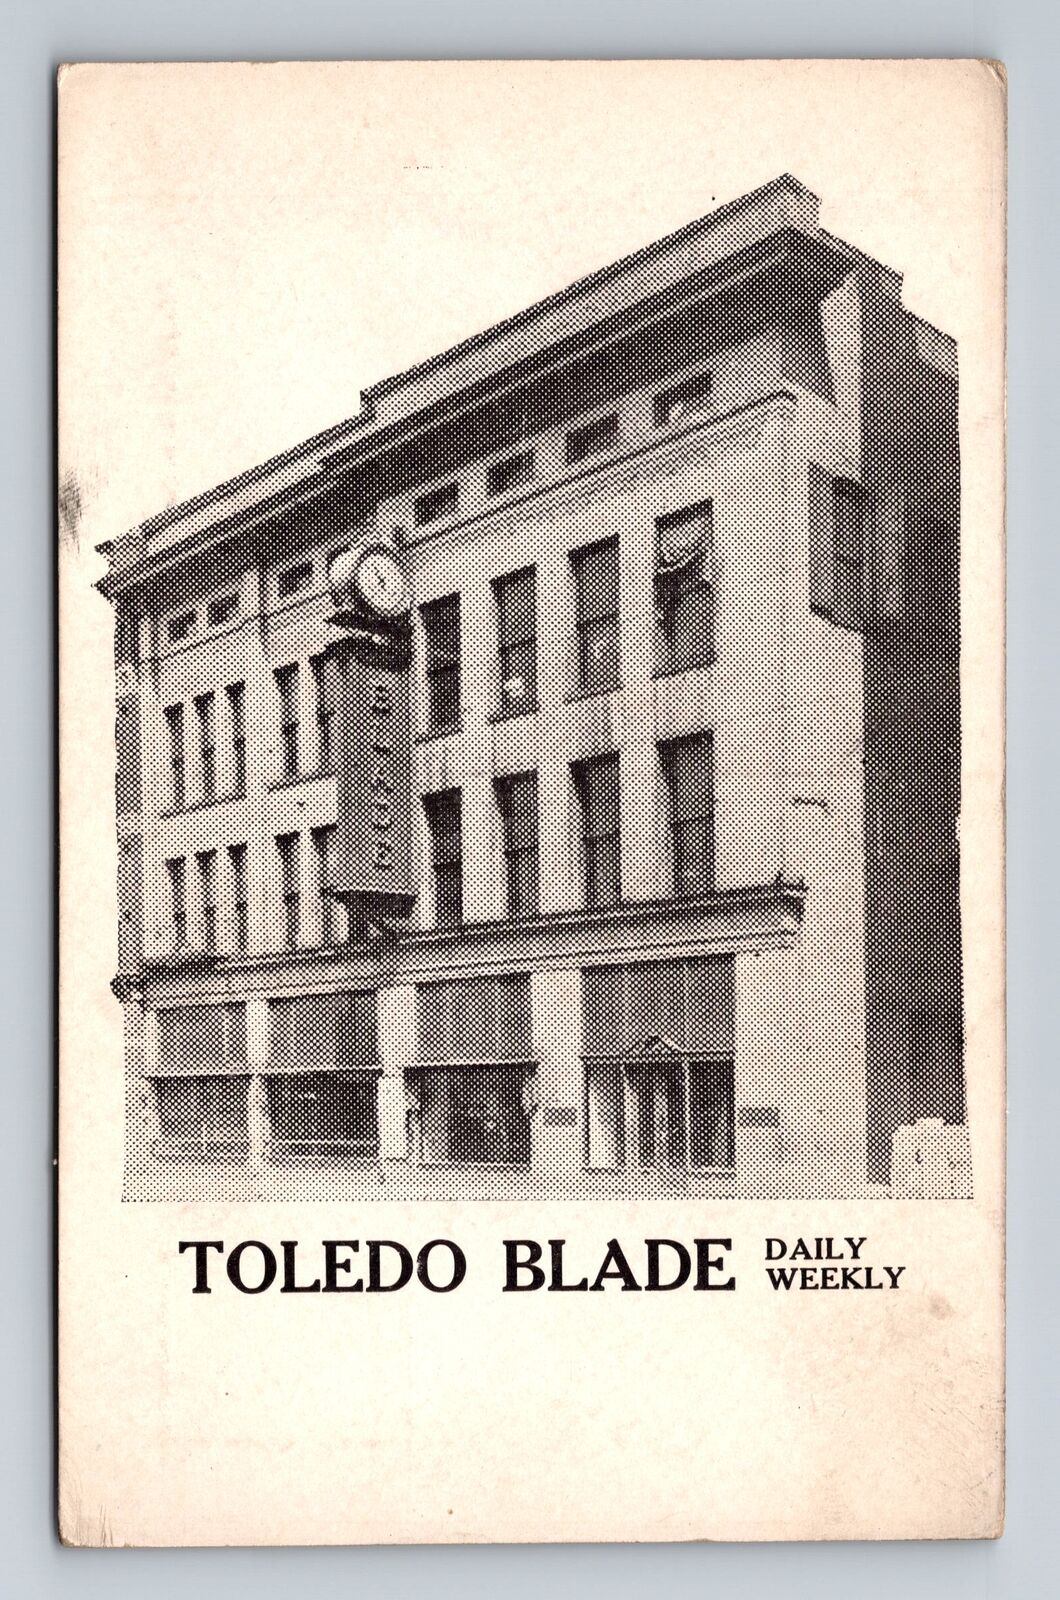 Toledo OH-Ohio, Toledo Blade, Daily Weekly, Antique, Vintage Postcard